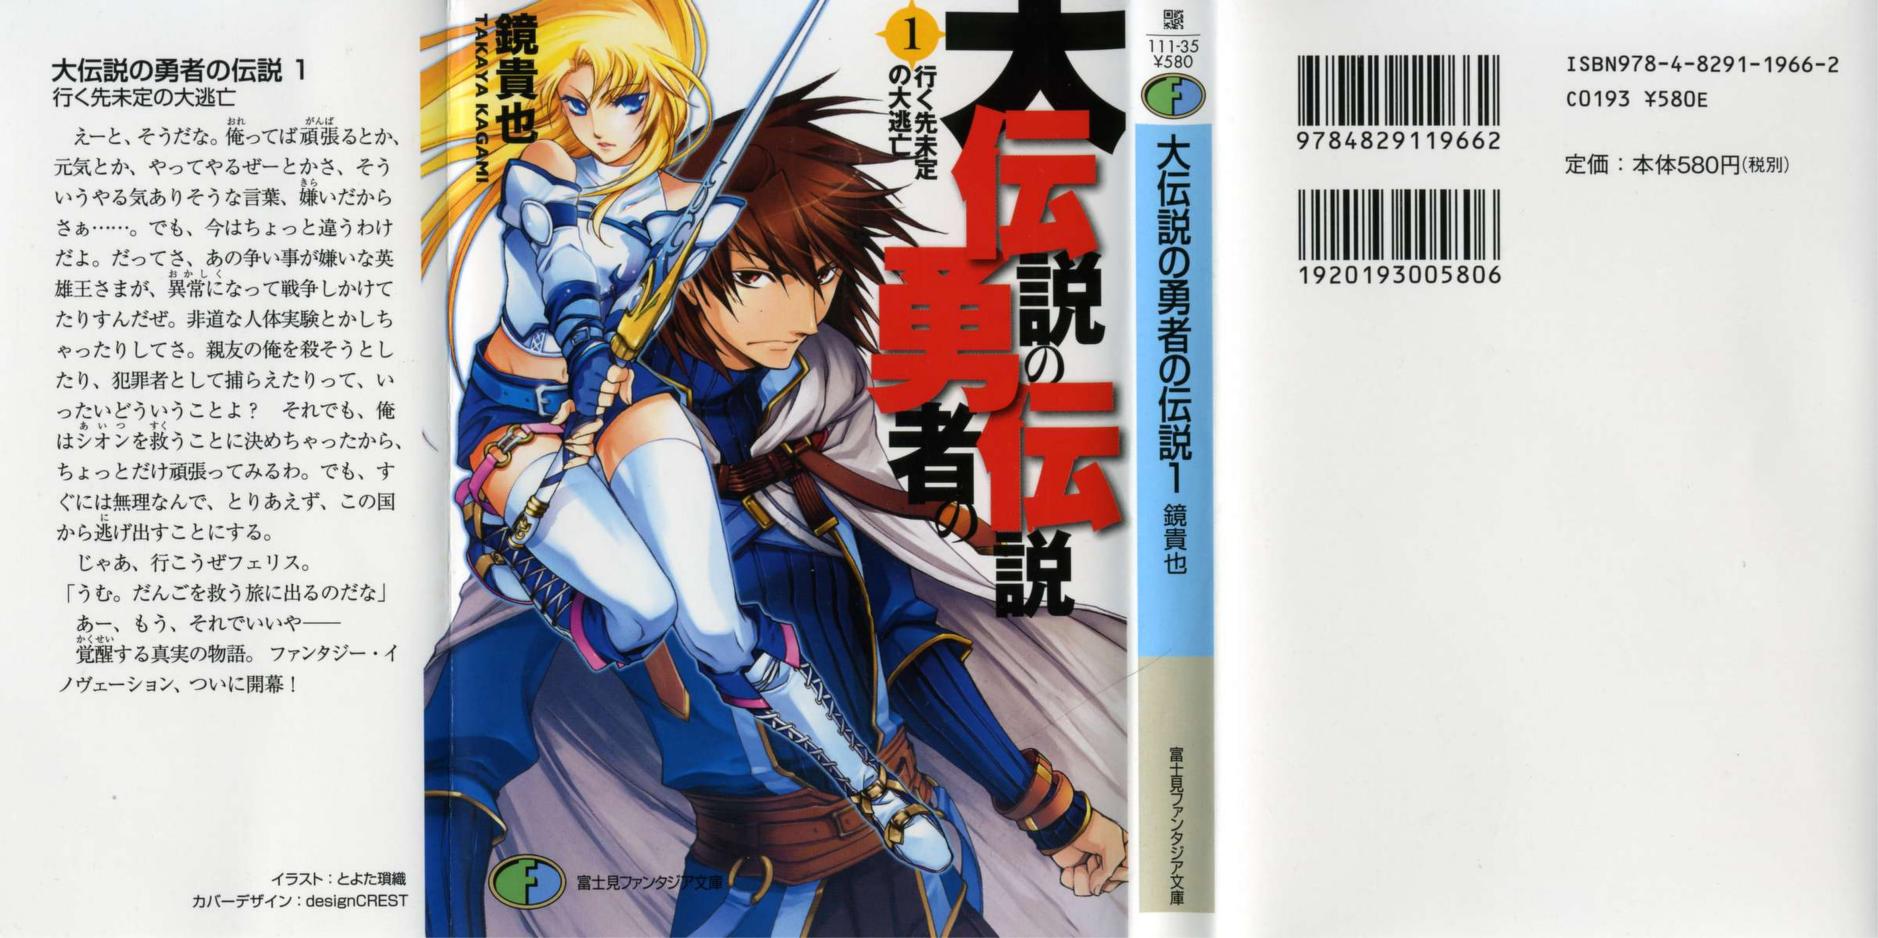 Popular Light Novel Series Densetsu no Yusha no Densetsu Adapted